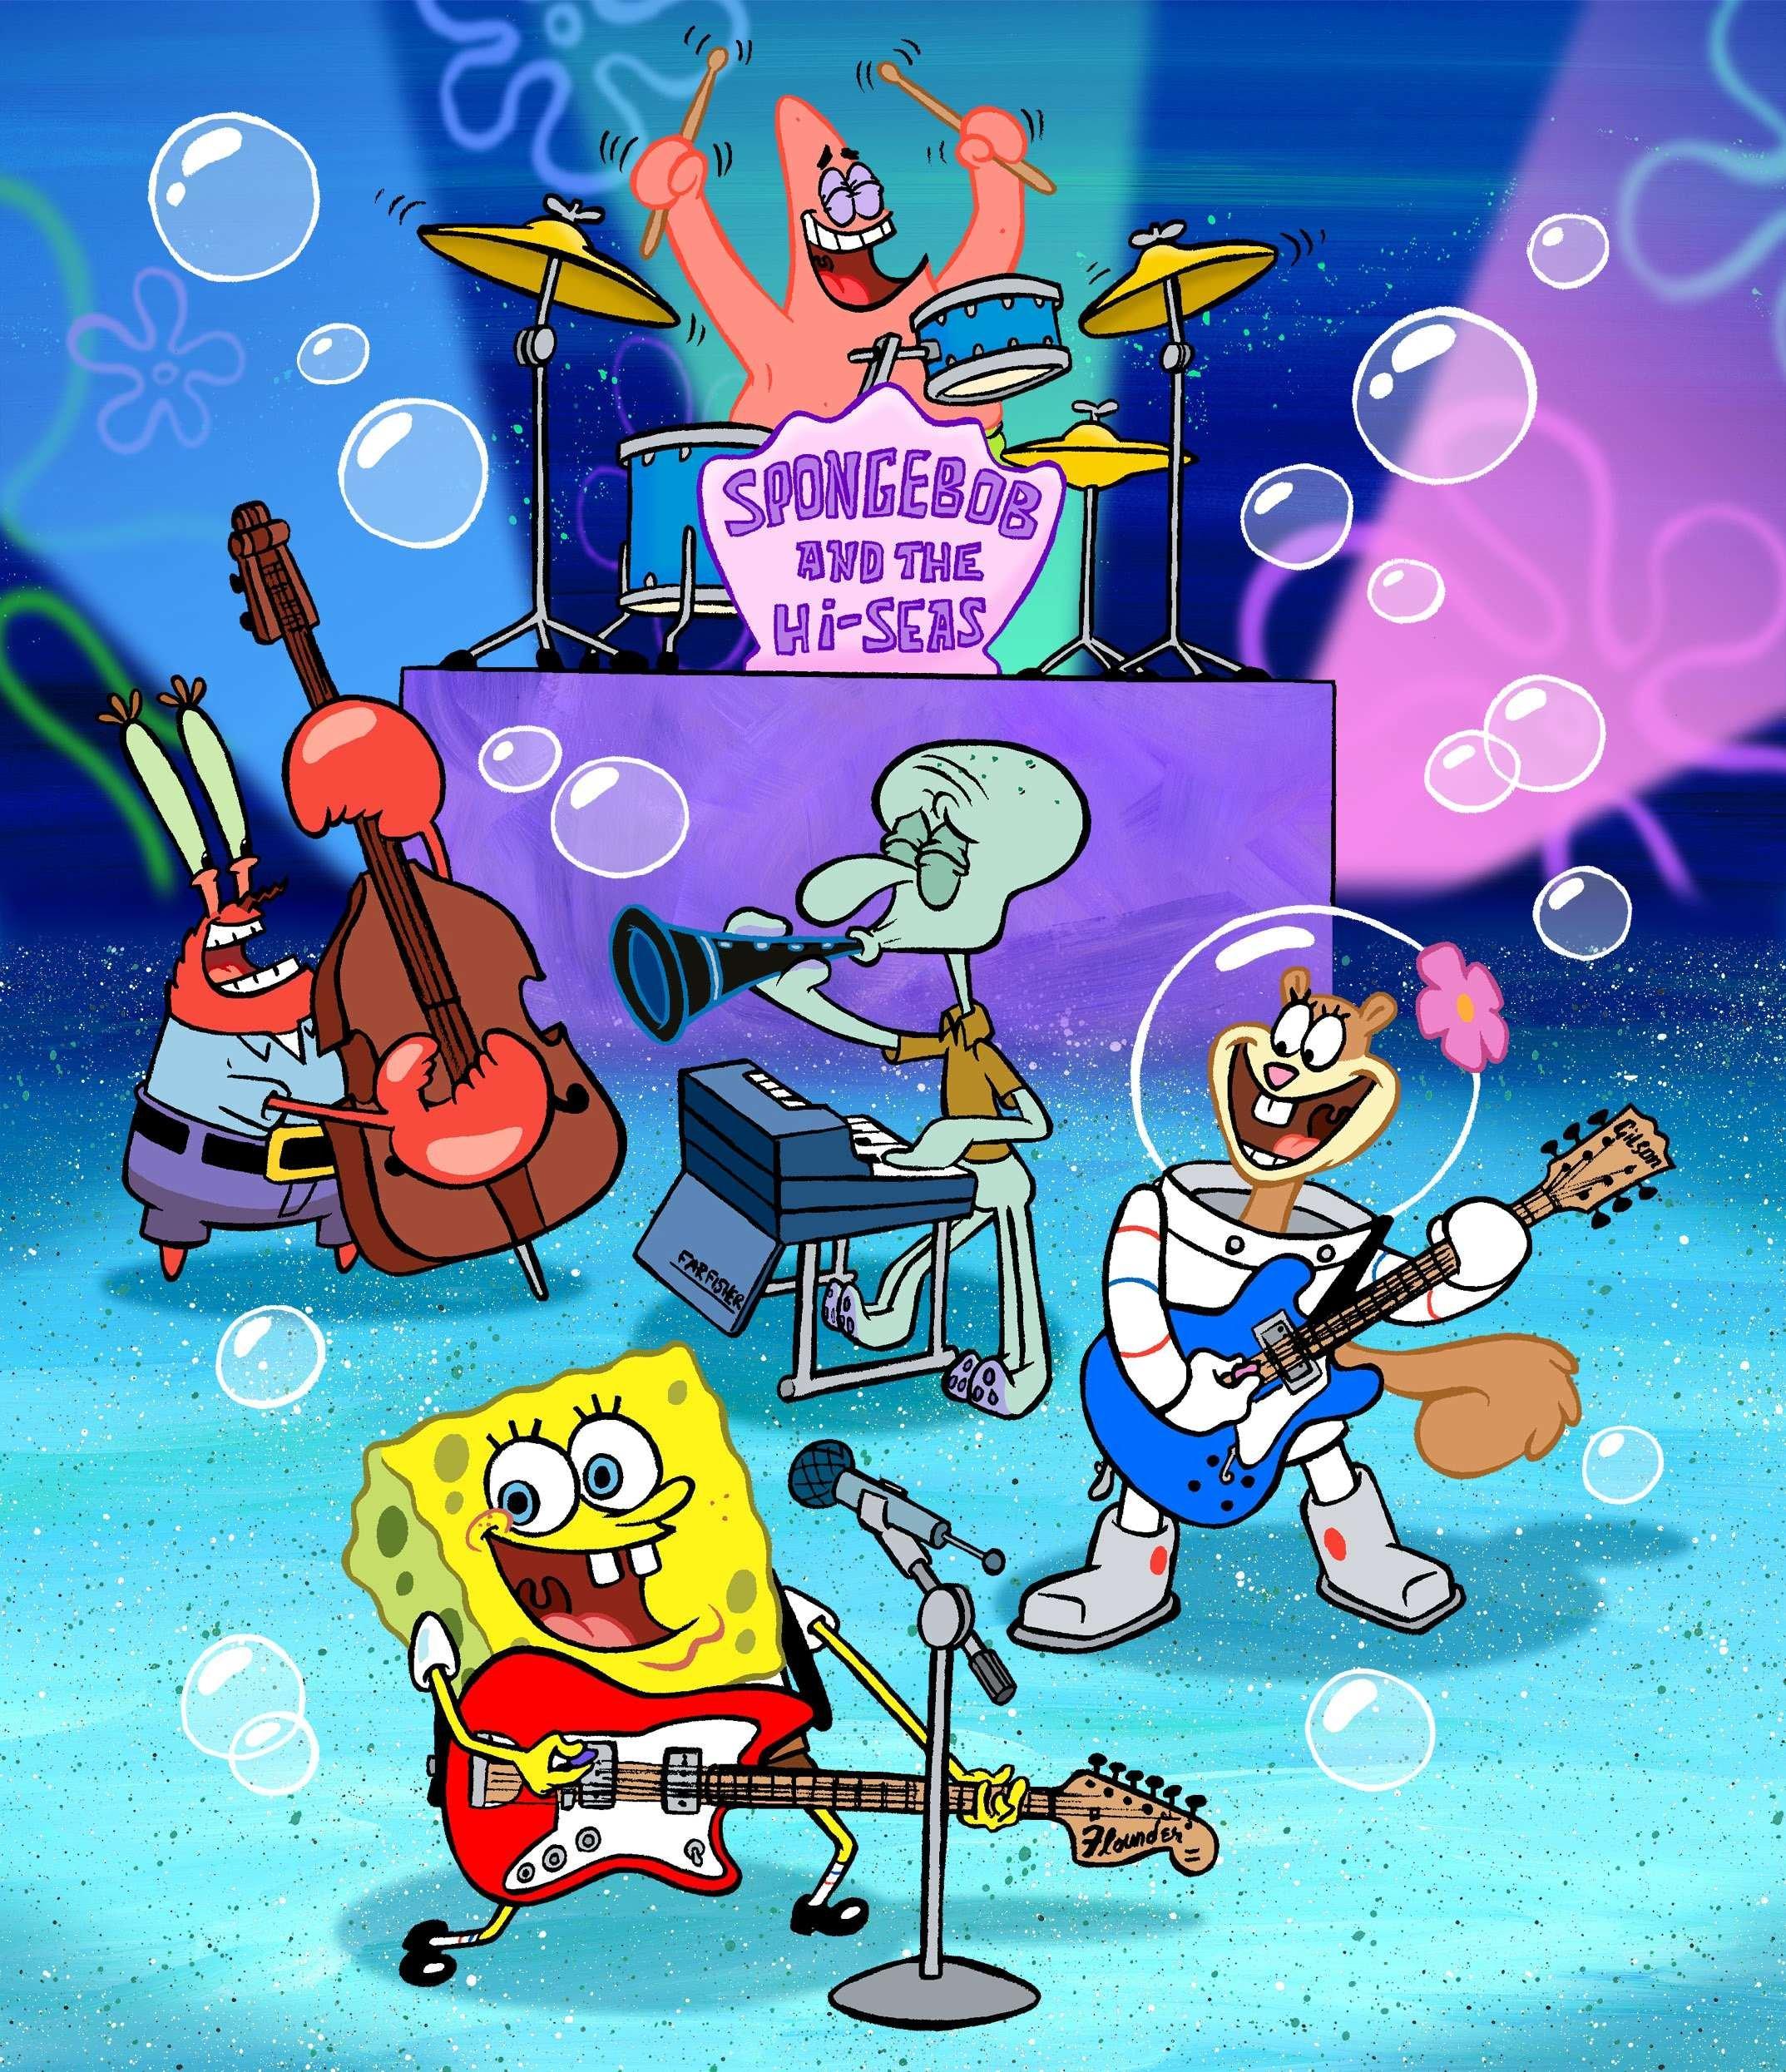 patrick star (spongebob) image Spongebob's band HD wallpaper